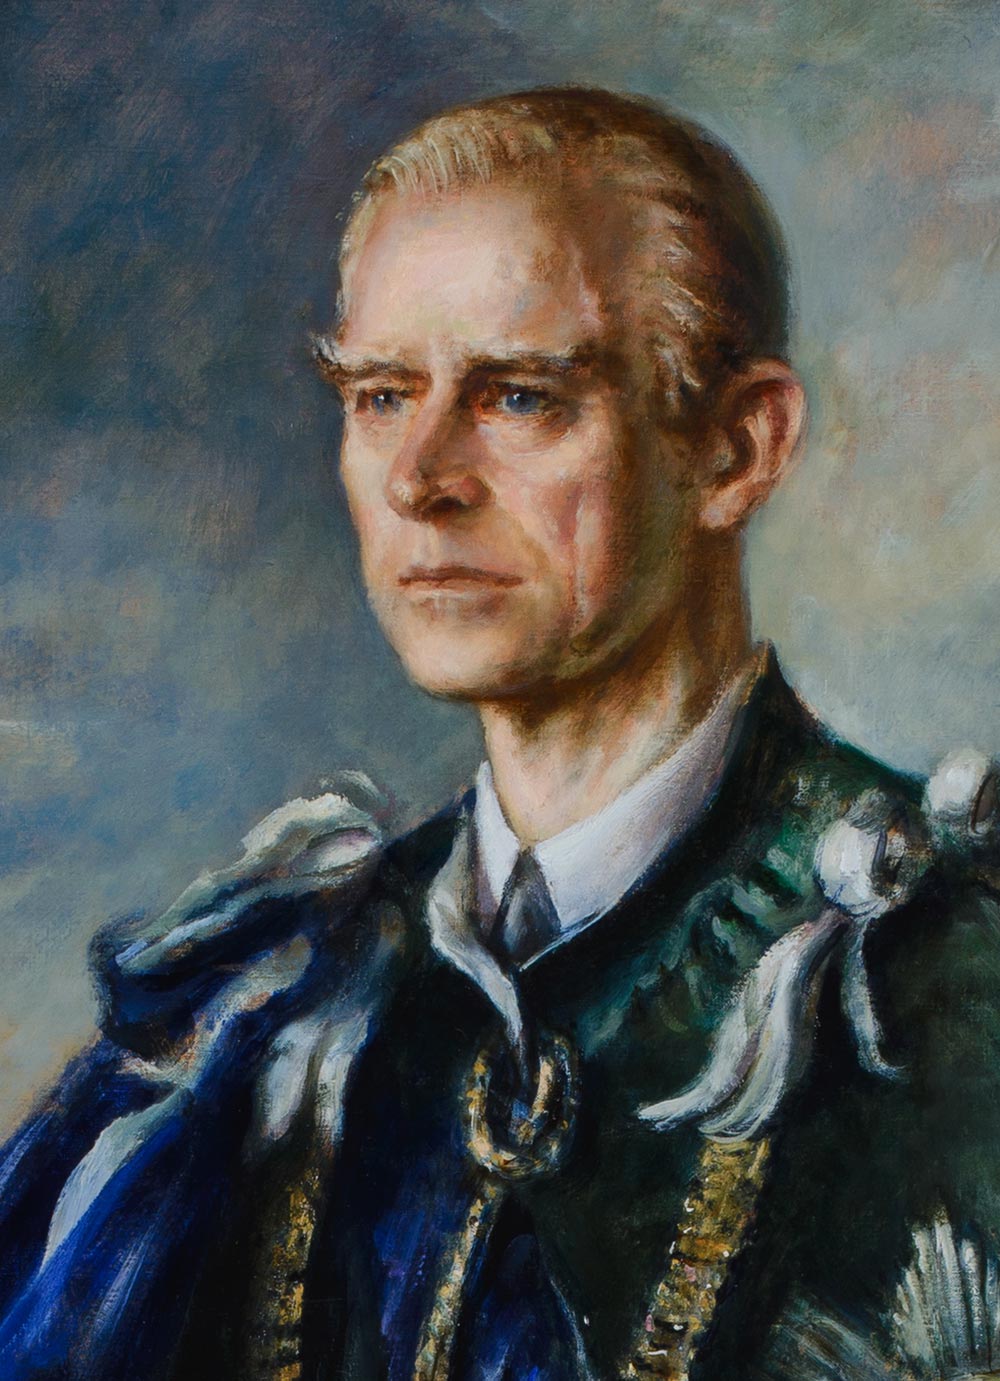 Portrait - HRH Prince Philip, Duke of Edinburgh